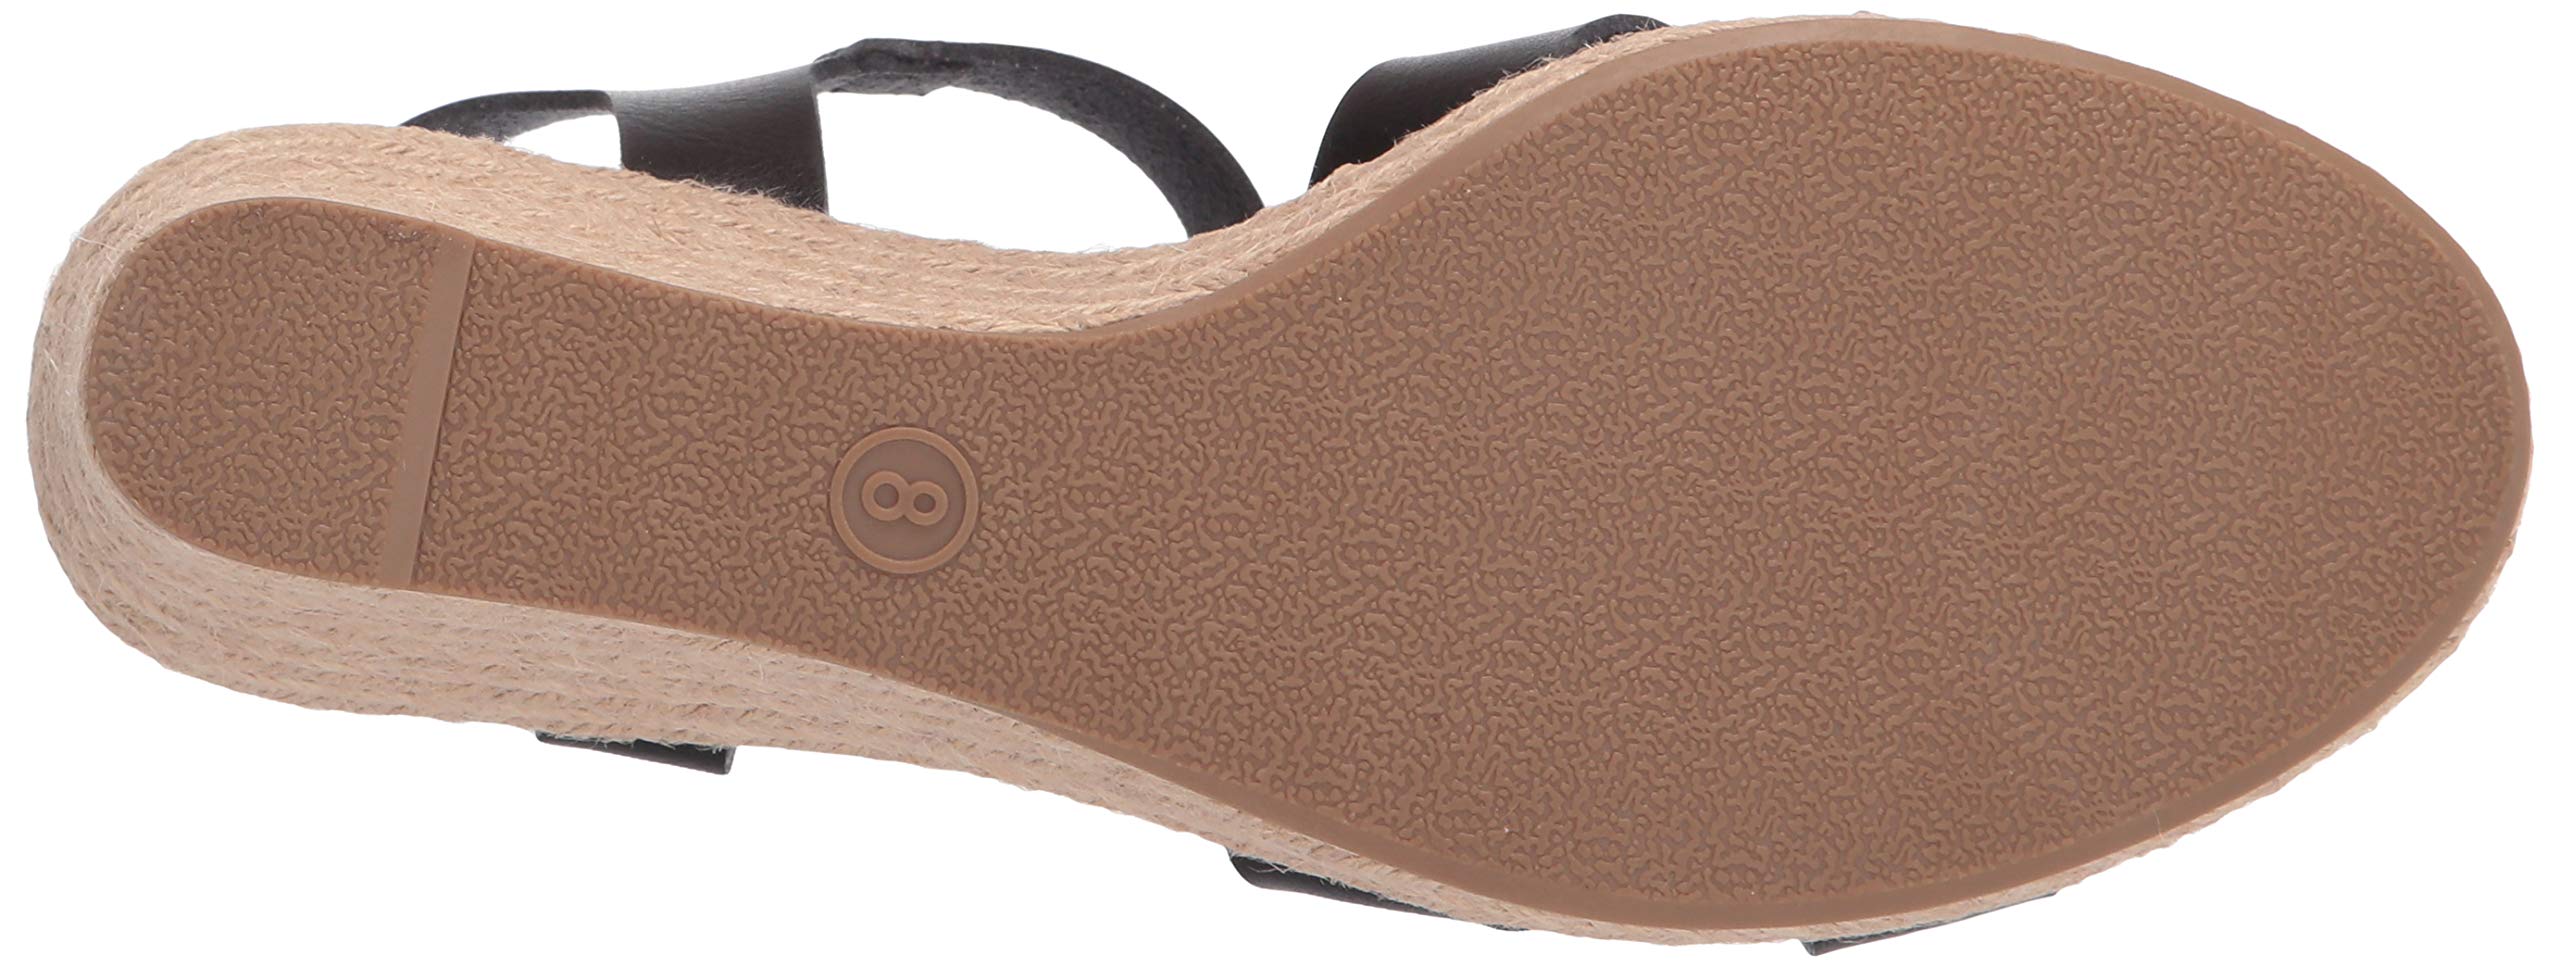 Amazon Essentials Women's Espadrille Wedge Sandal